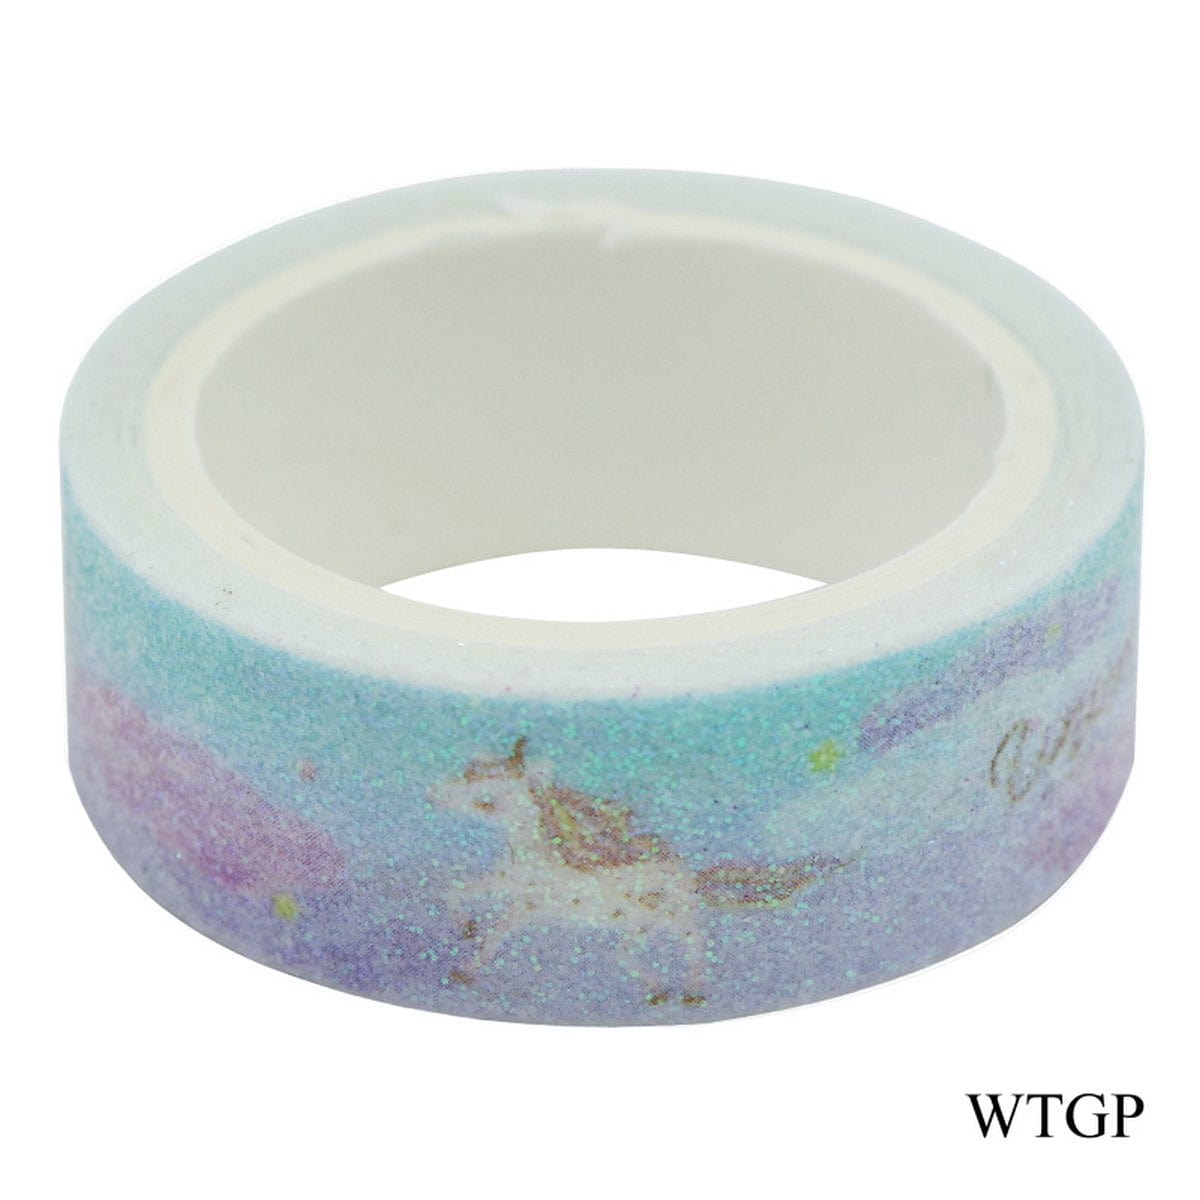 jags-mumbai Washi Tape Glitter Washi Tape Set (60 Rolls)